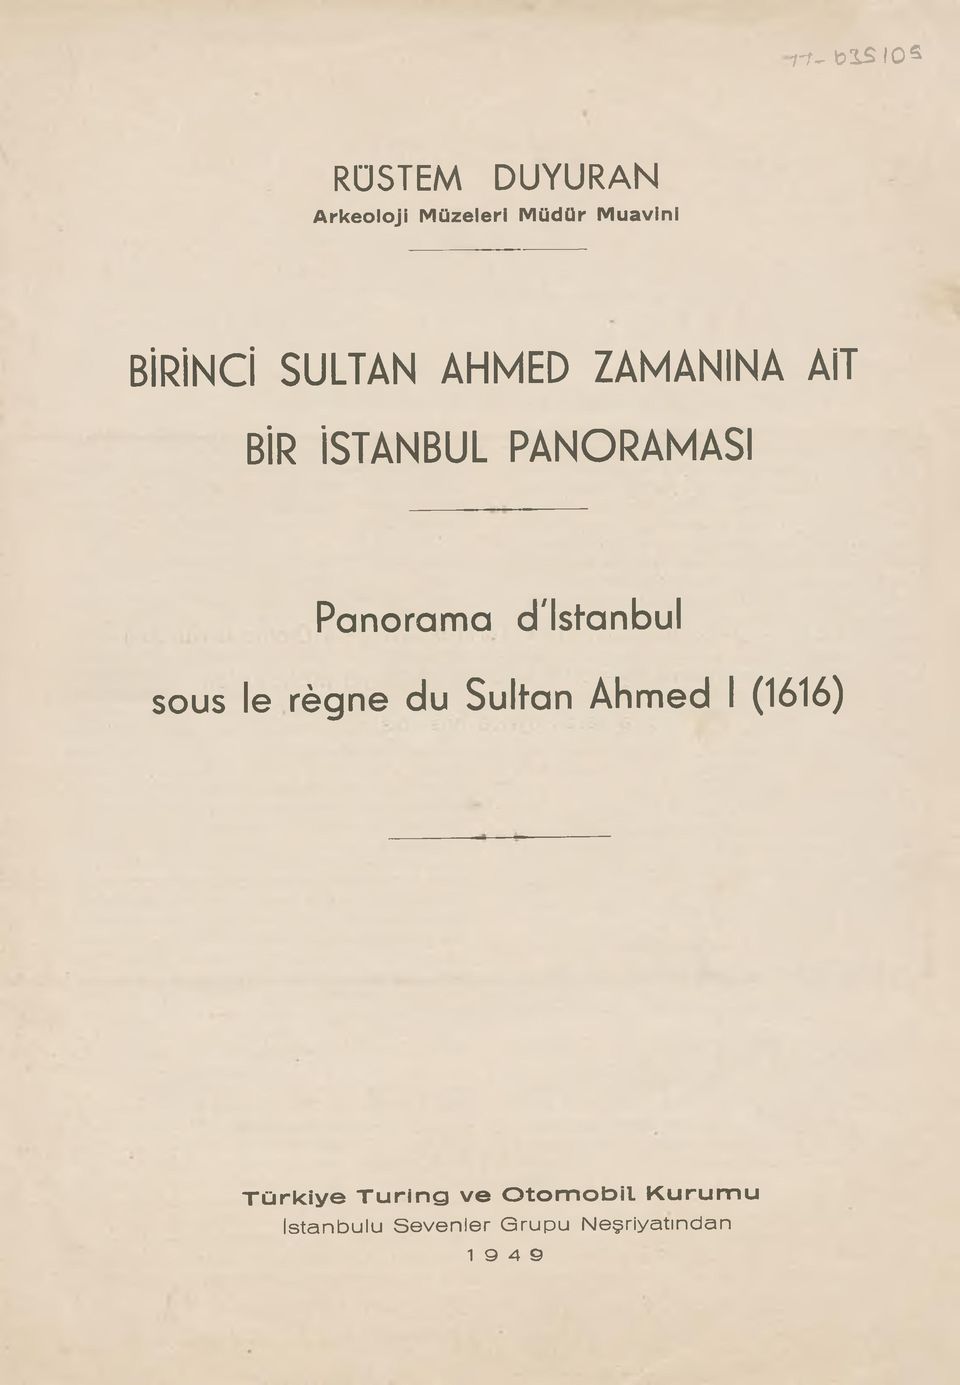 d'istanbul sous le règne du Sultan Ahmed I (1616) Türkiye Turing ve O